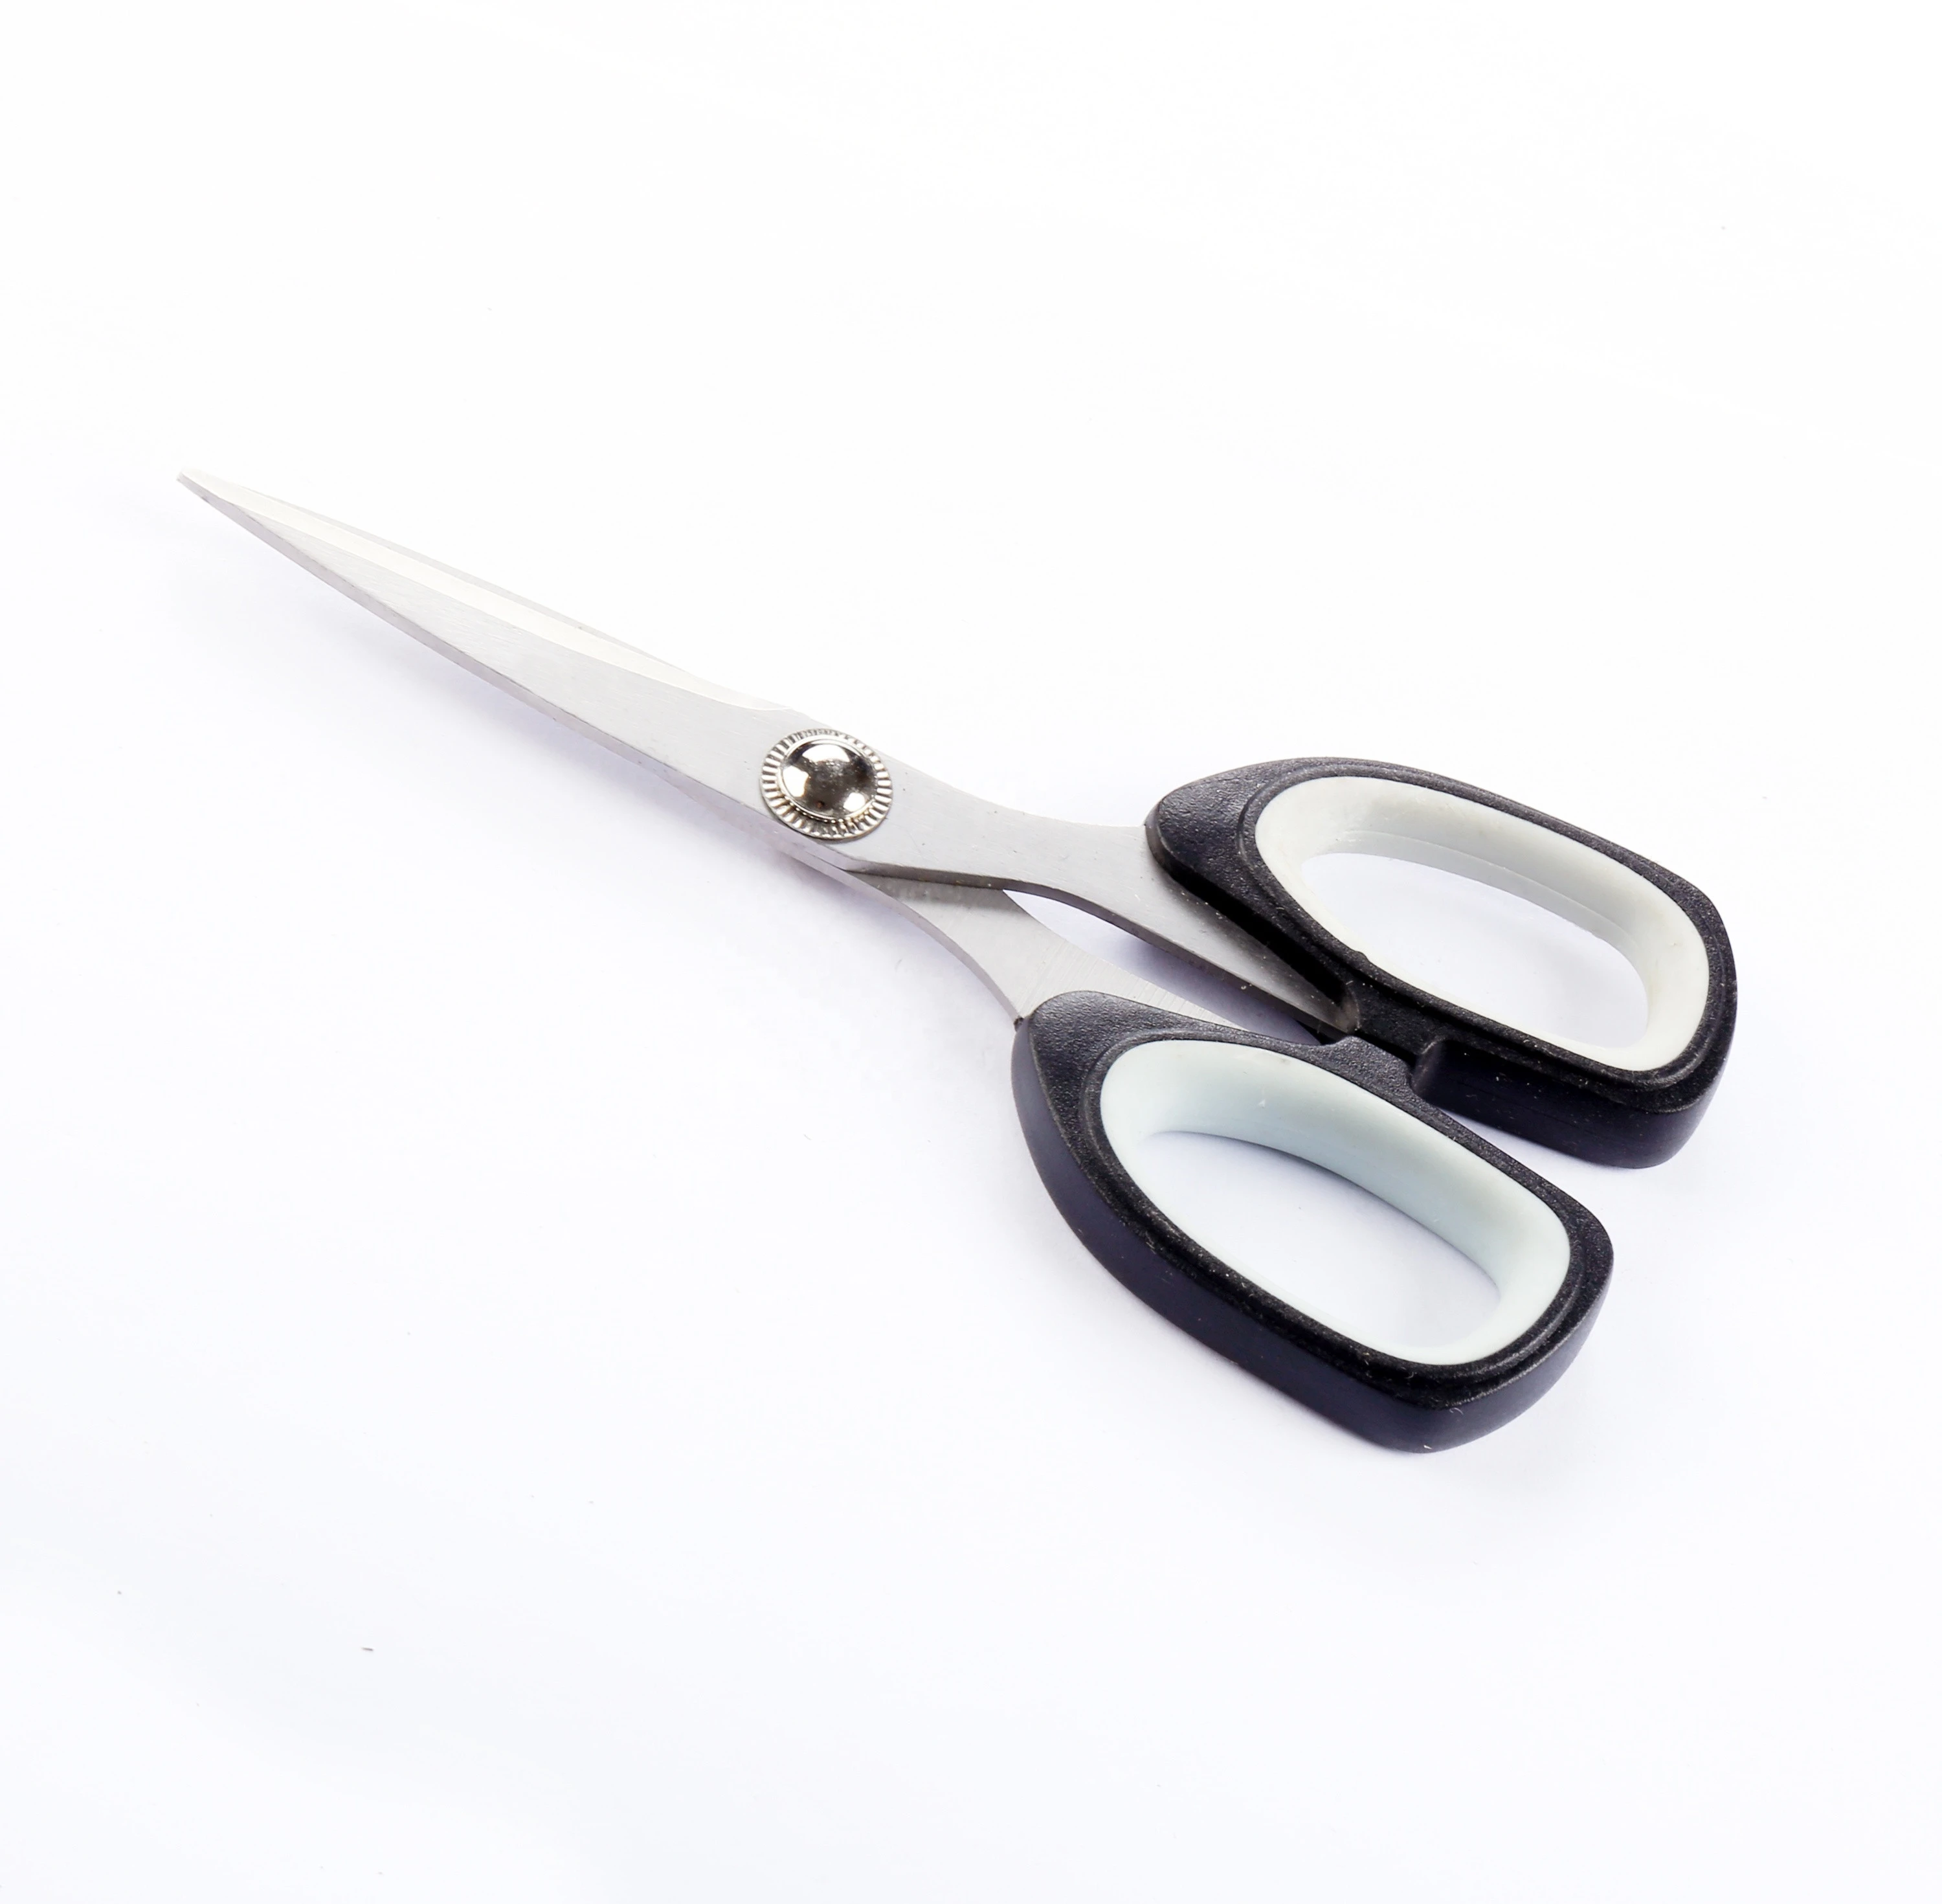 Tailor Scissors High Quality 9.25&quot; Soft Grip Handle Household Scissors With Titanium Coating Blade SCT1509